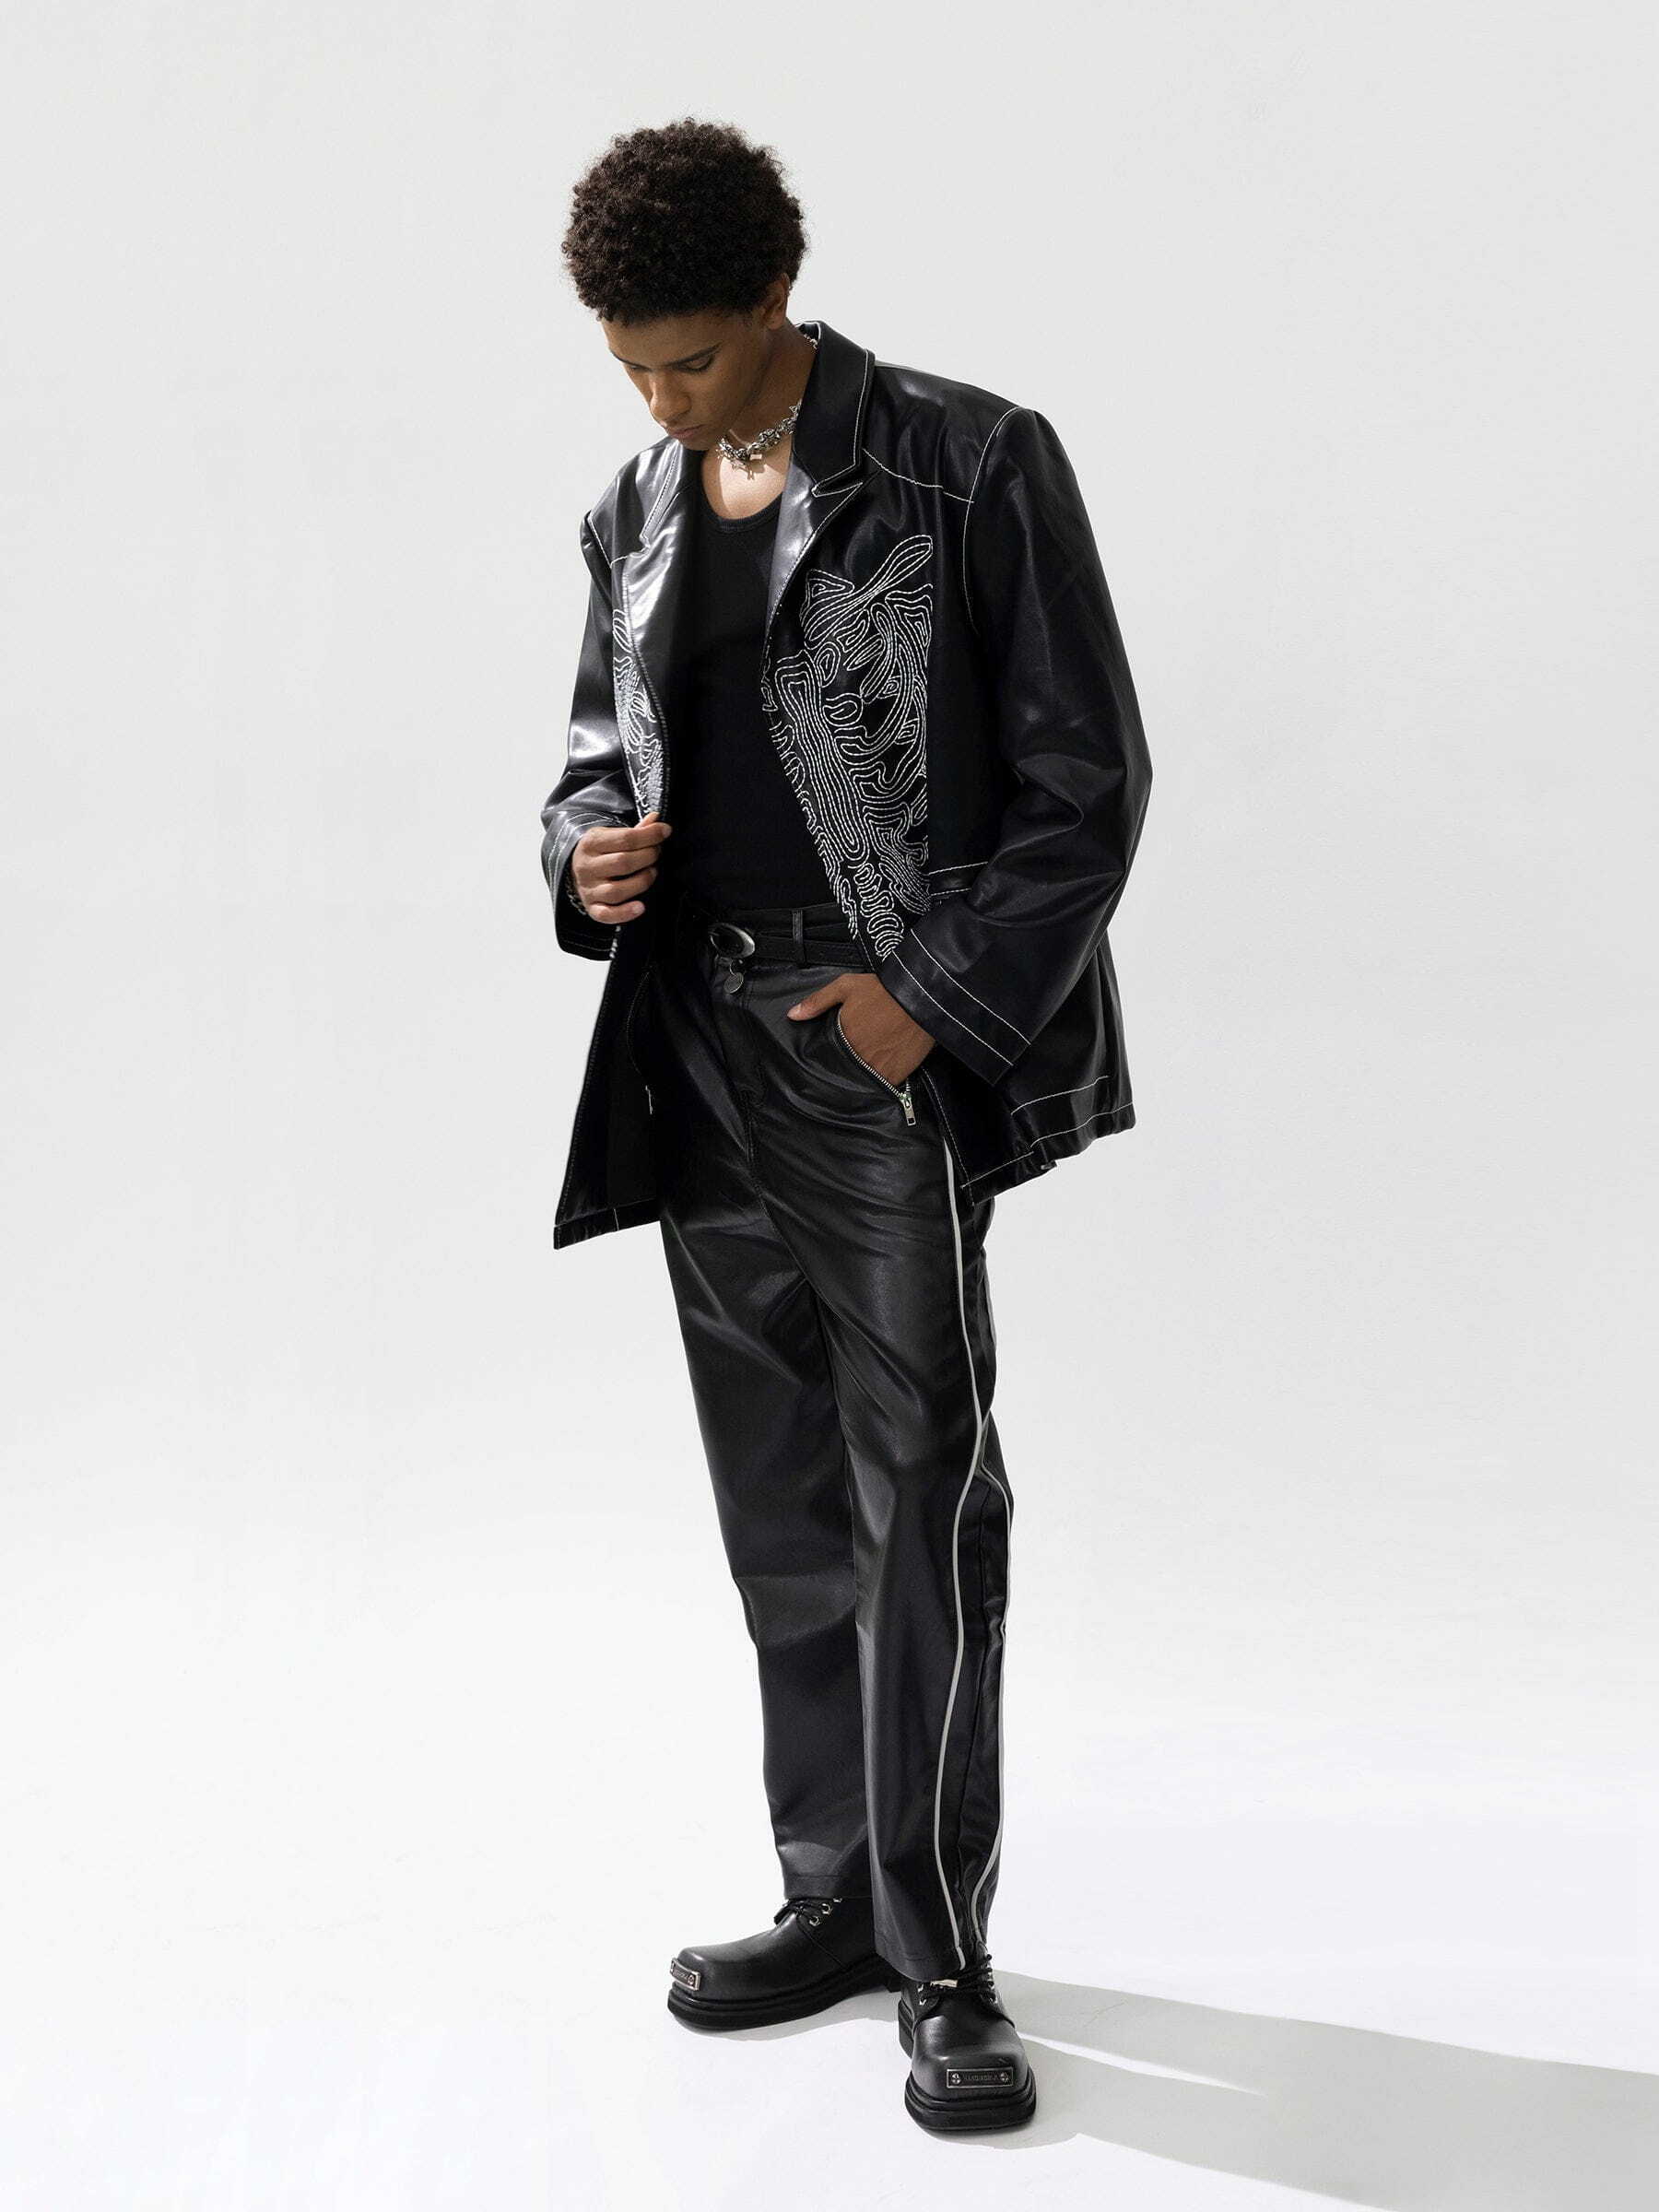 classic black skull jacket [edgy] streetwear essential 8973